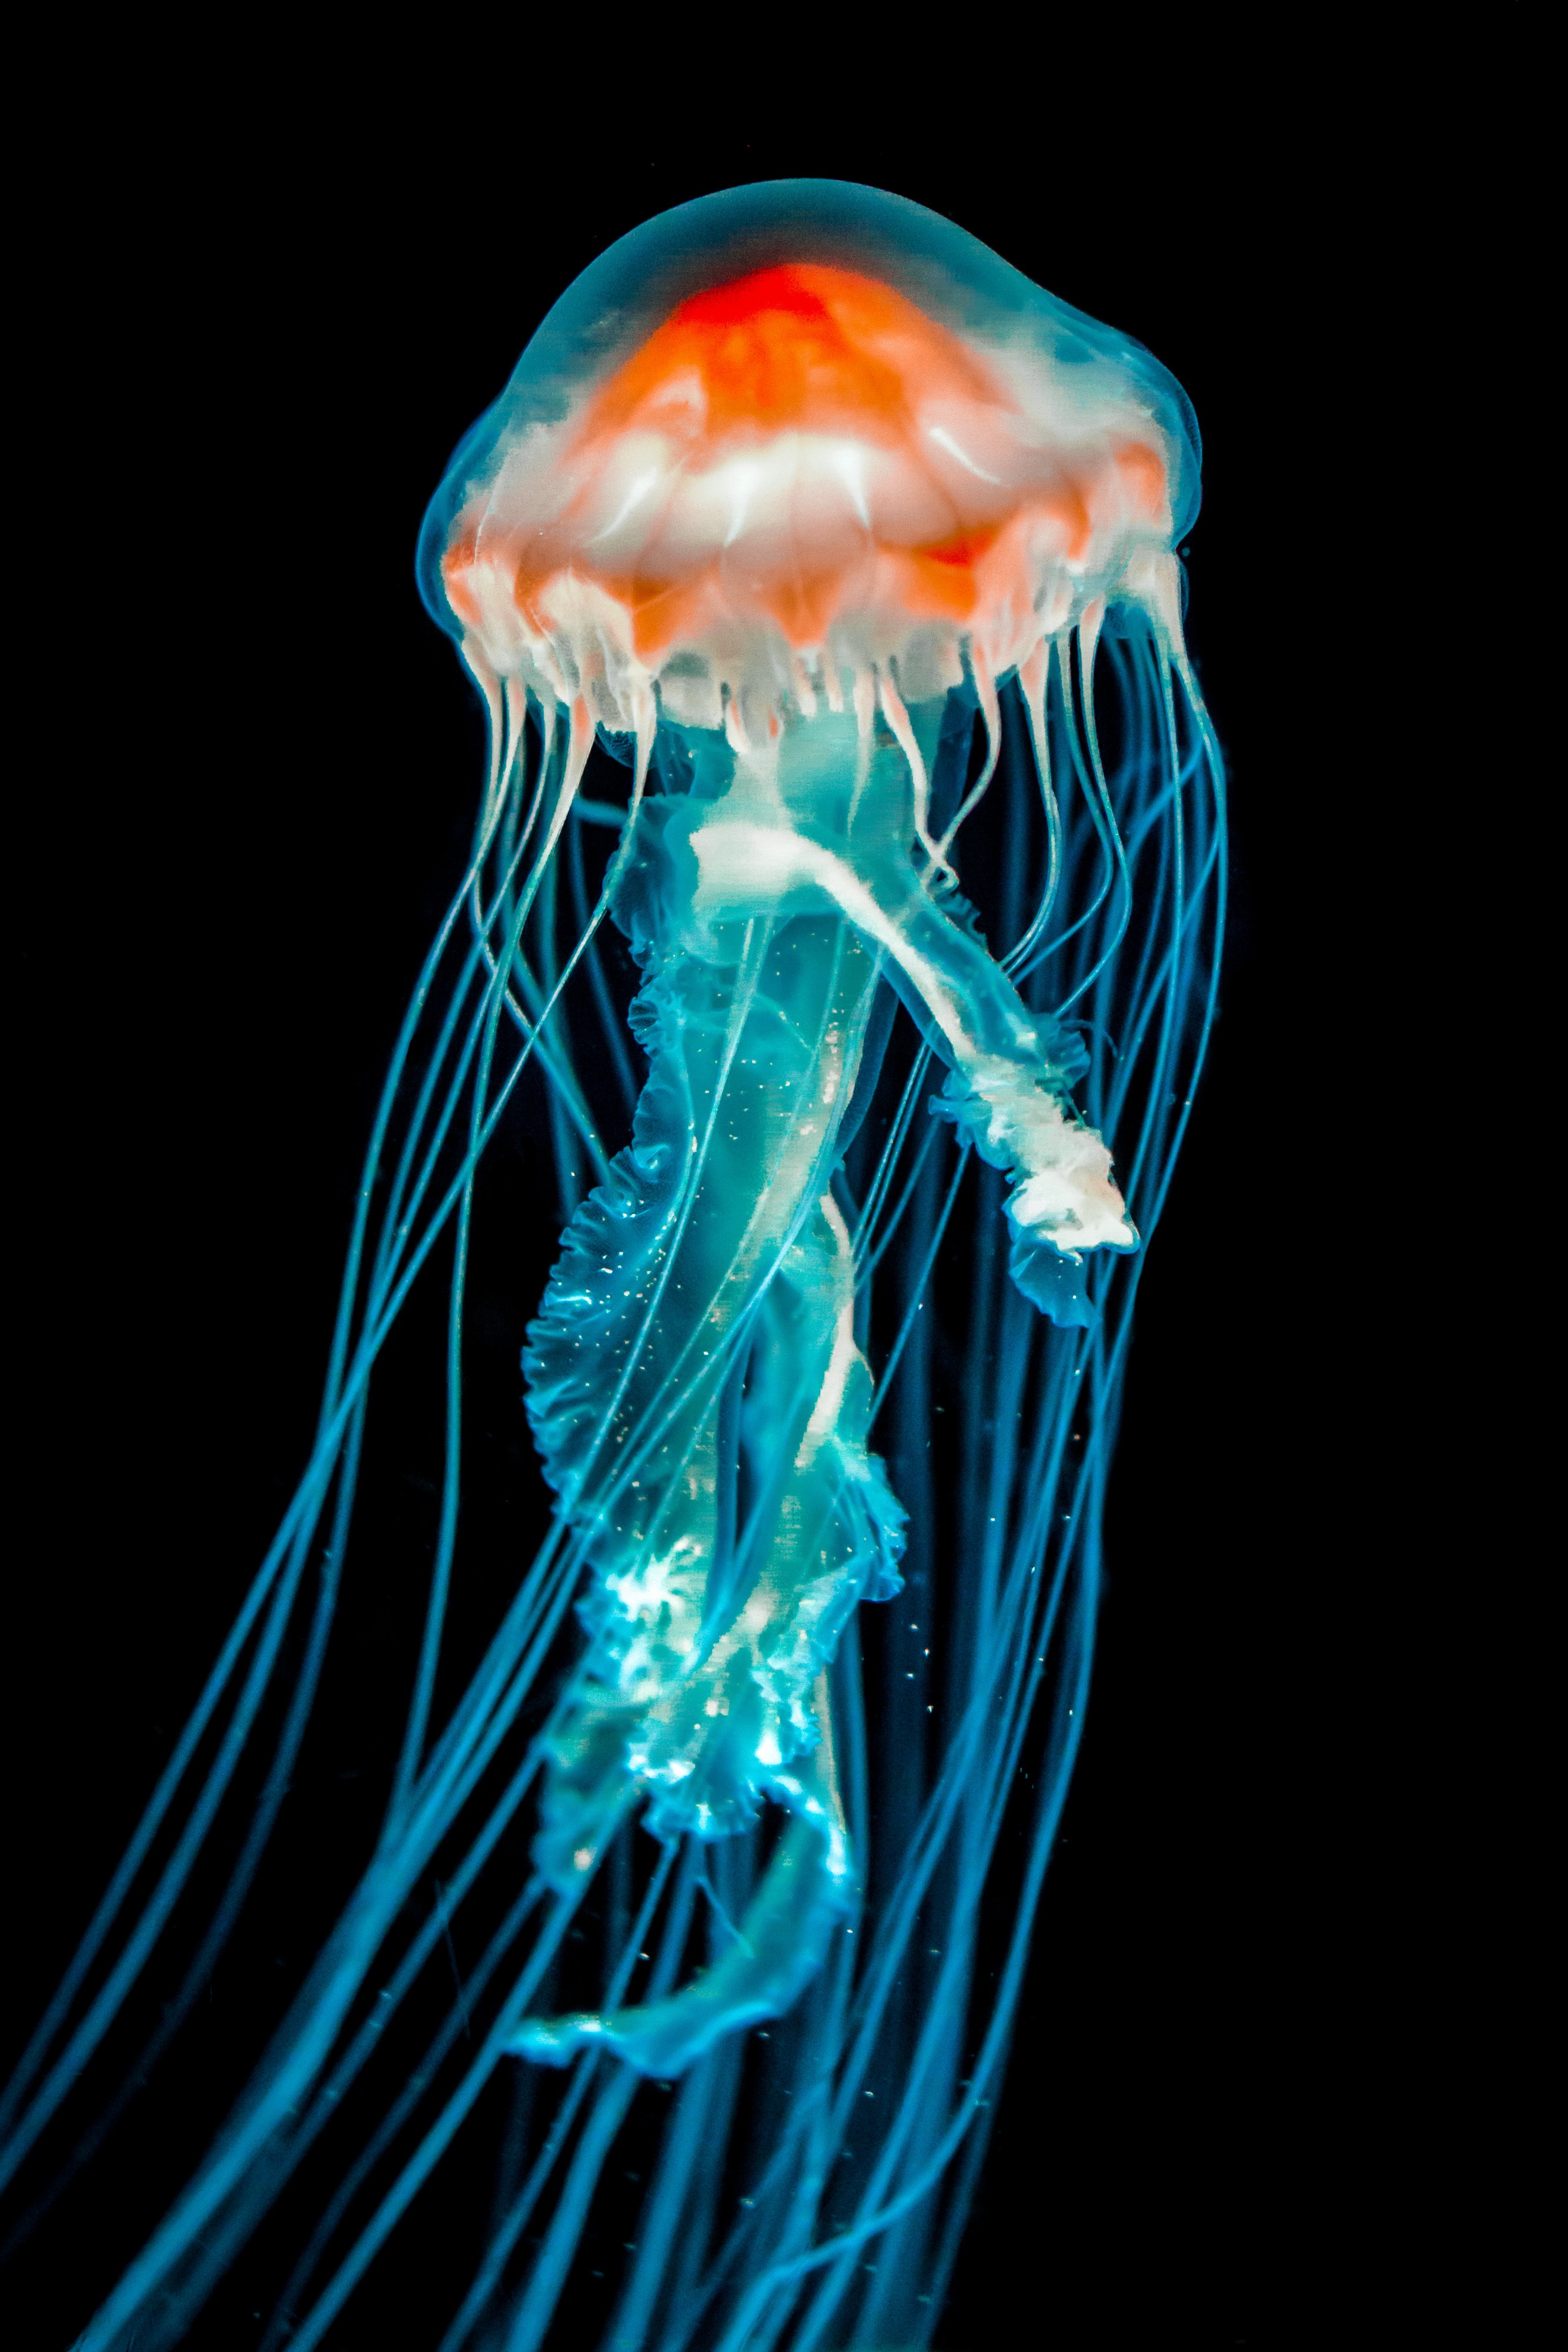 jellyfish, tentacle, dark, animals, black, underwater world for android